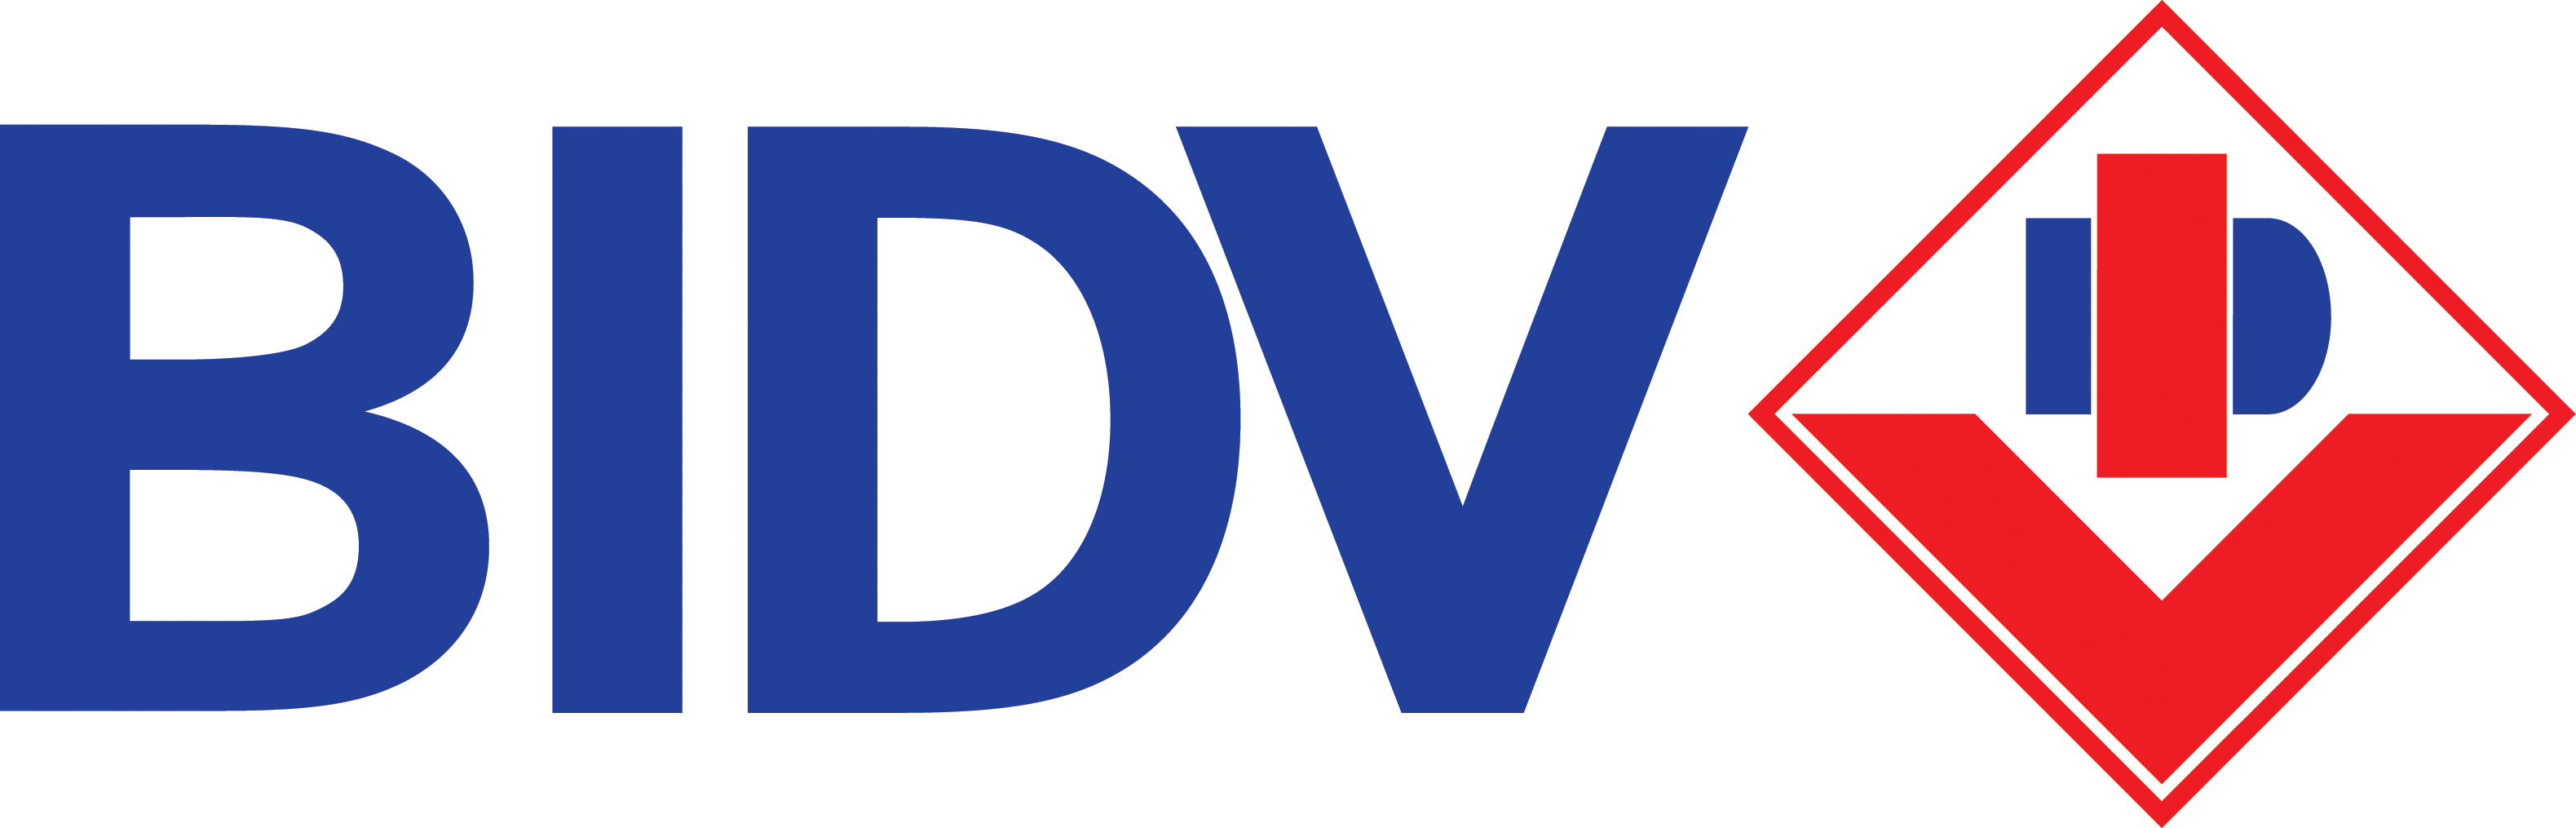 Logo_BIDV.jpg